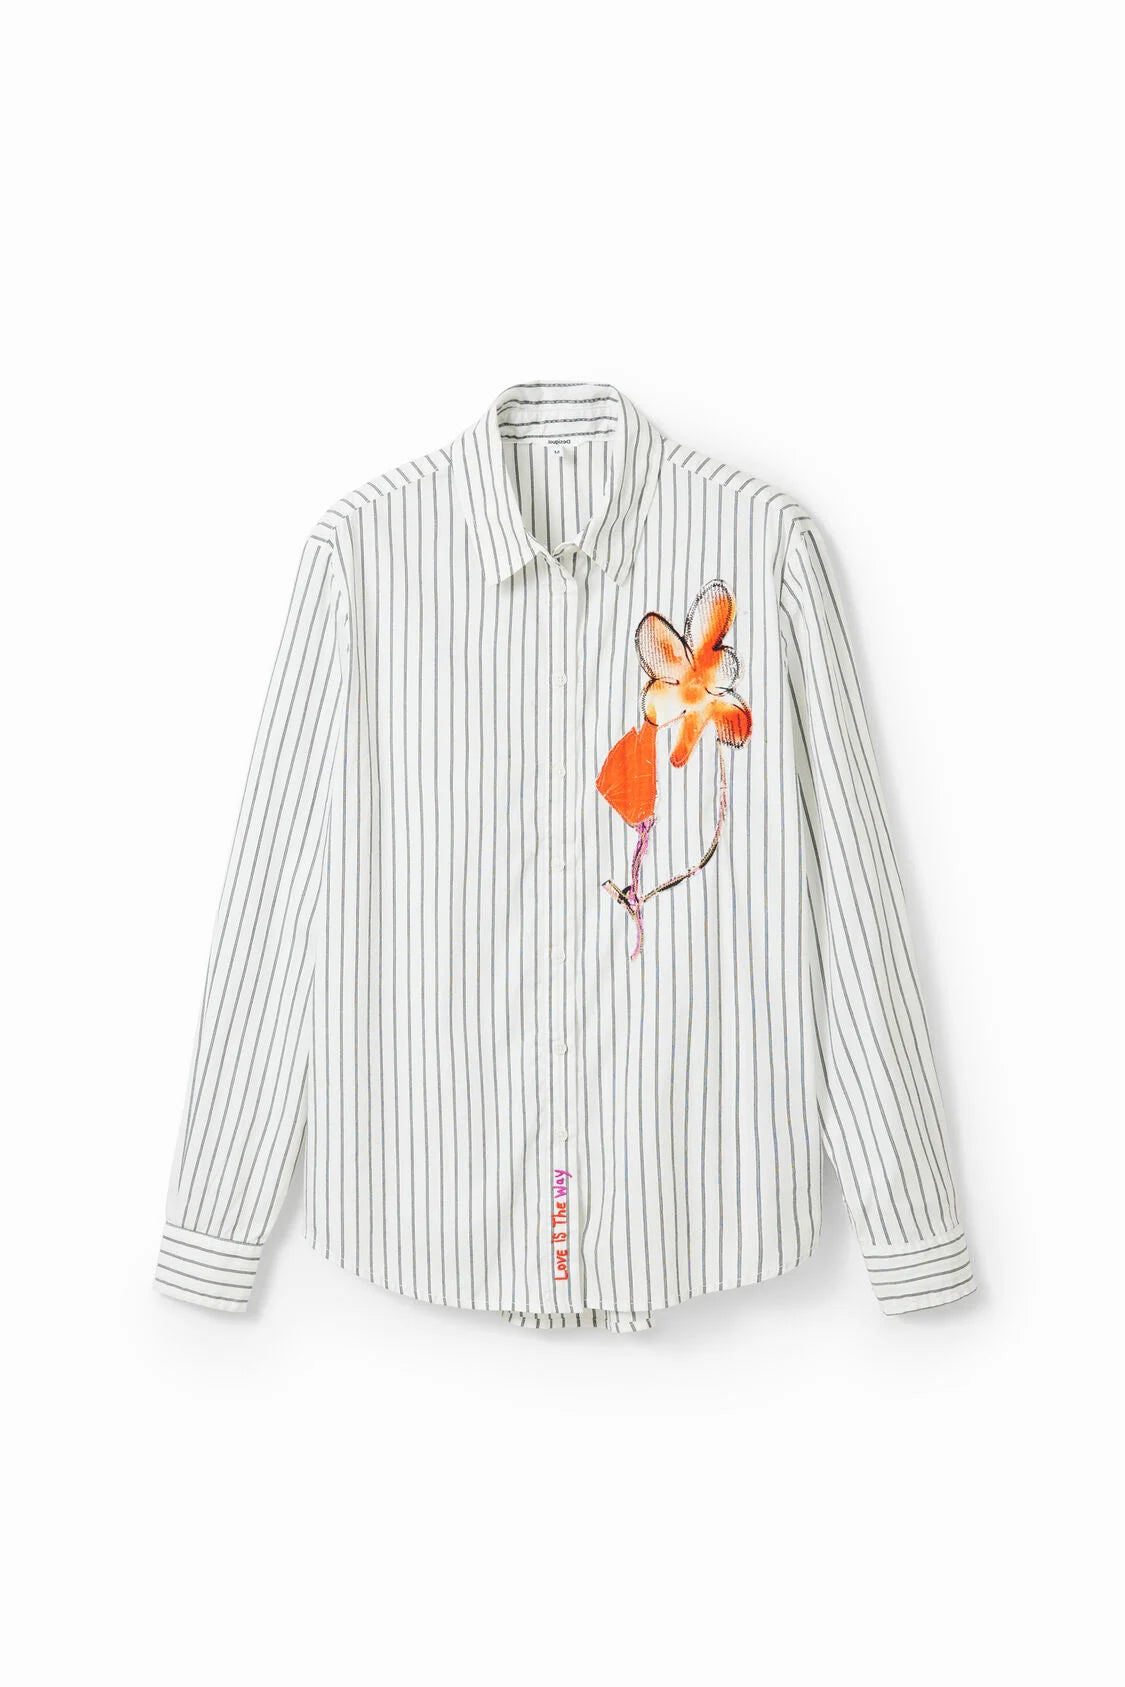 Clothing - Desigual Striped Flower Shirt